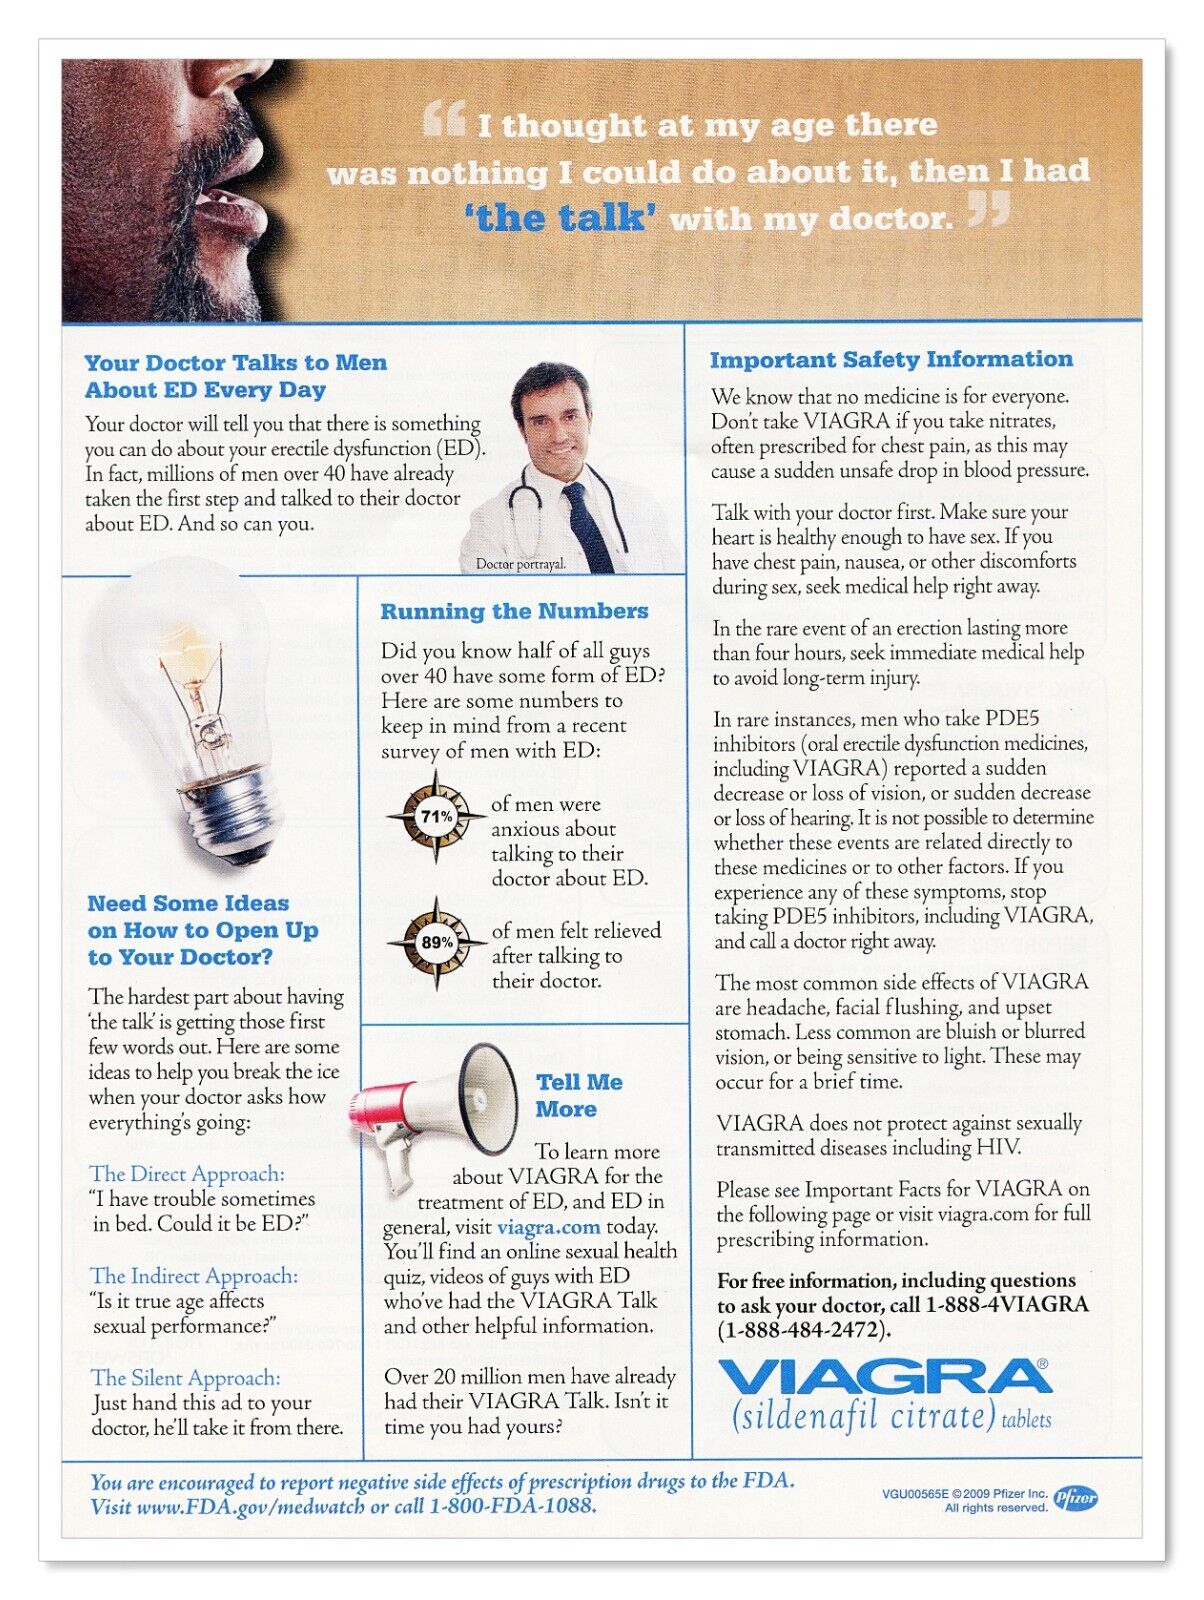 Viagra Pfizer Pharmaceutical 'The Talk' 2010 Full-Page Print Magazine Ad